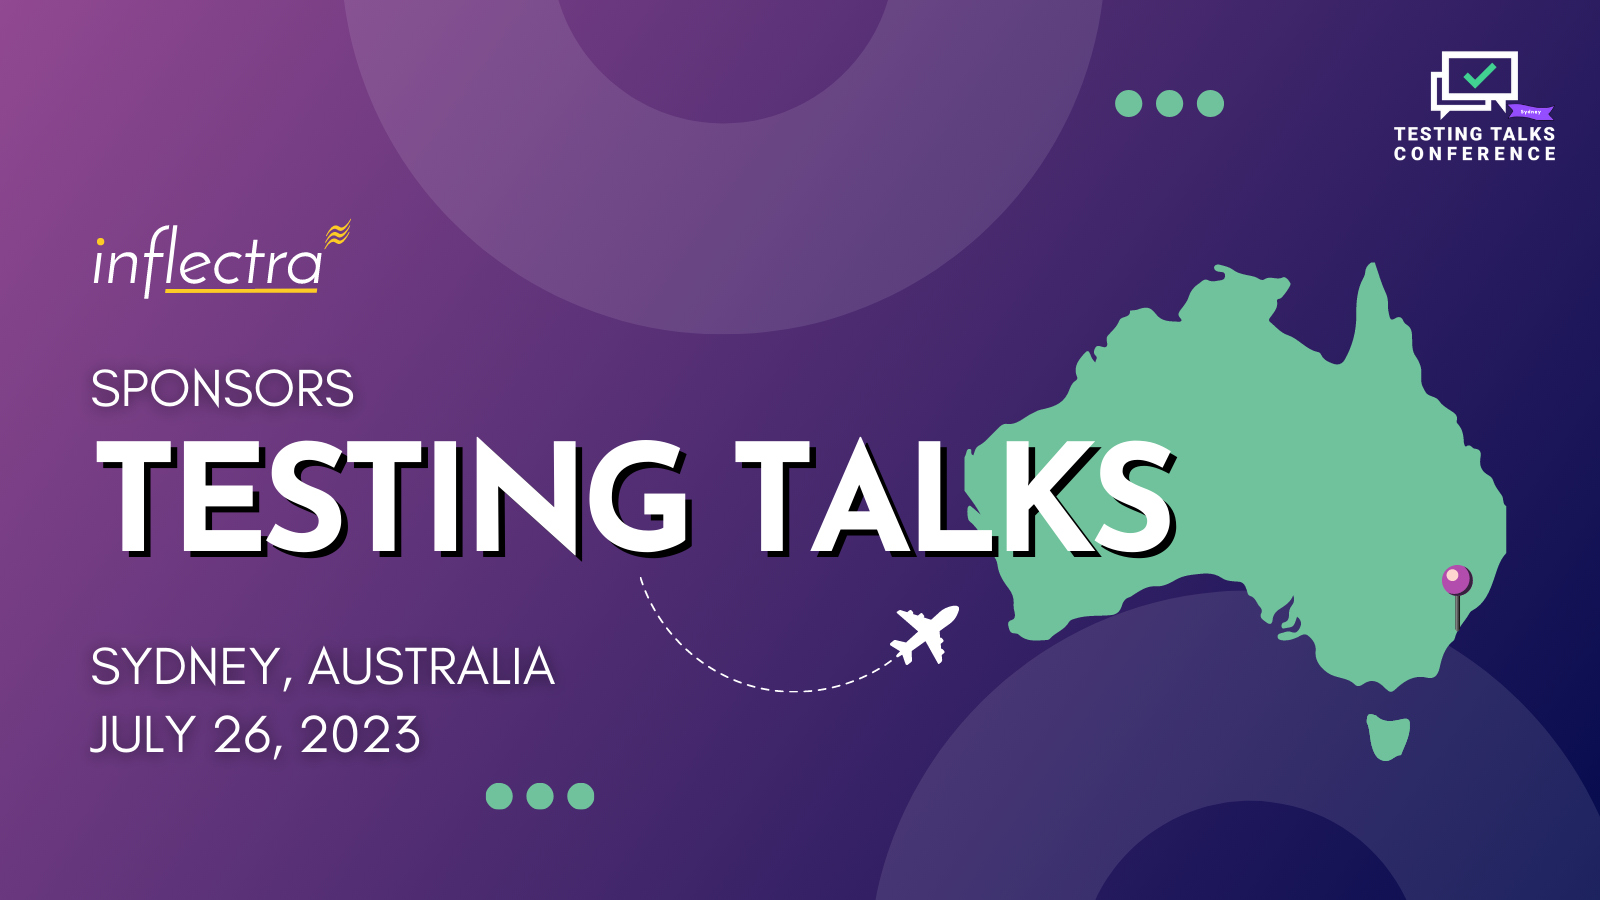 inflectra-sponsors-testing-talks-conference-in-sydney-australia-image